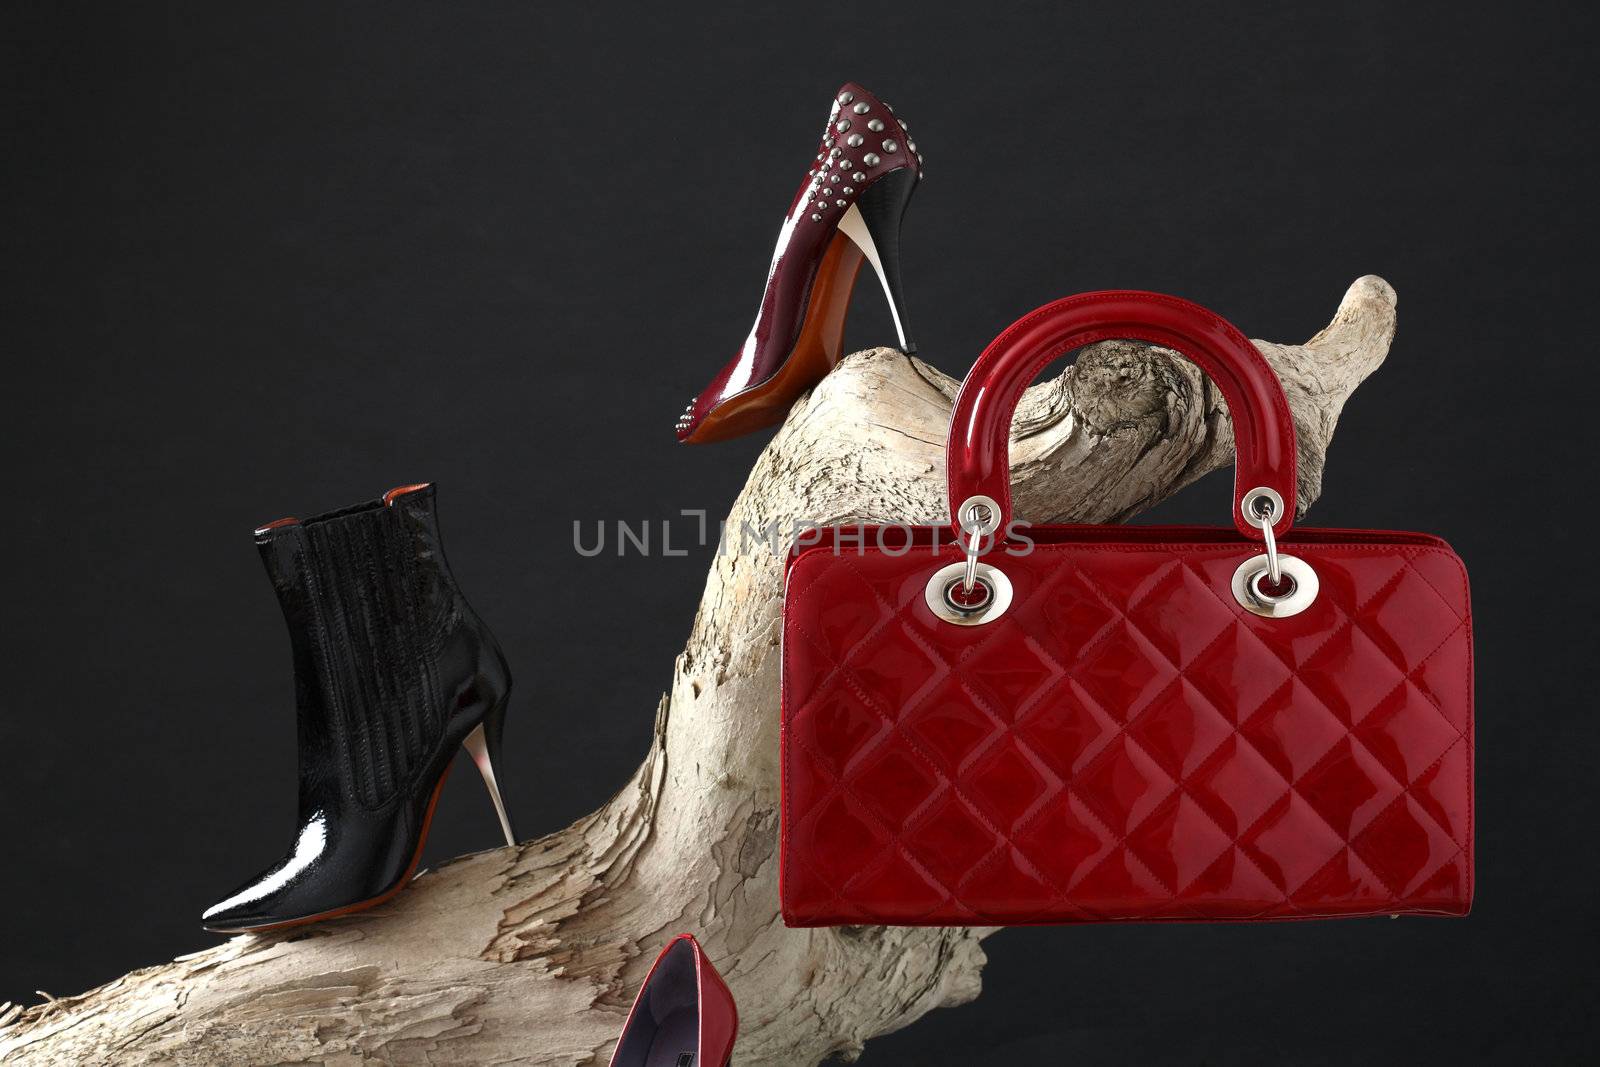 shoes and handbag composition